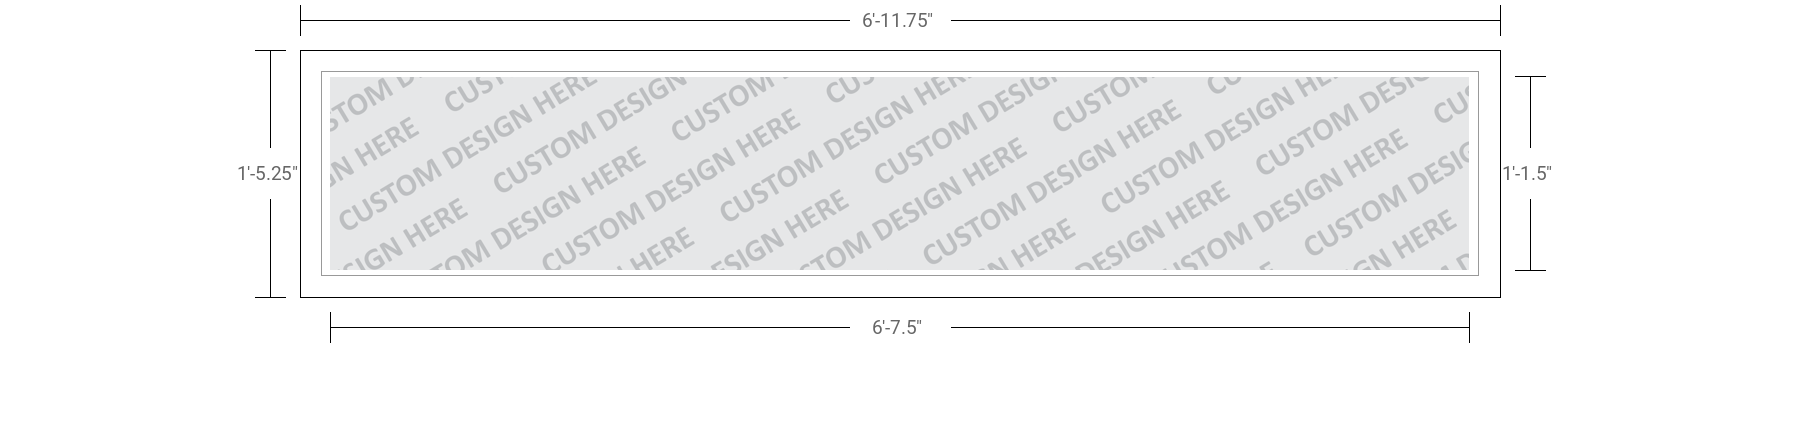 1.5' x 7' Digital Print Pan Formed Single Sign Face